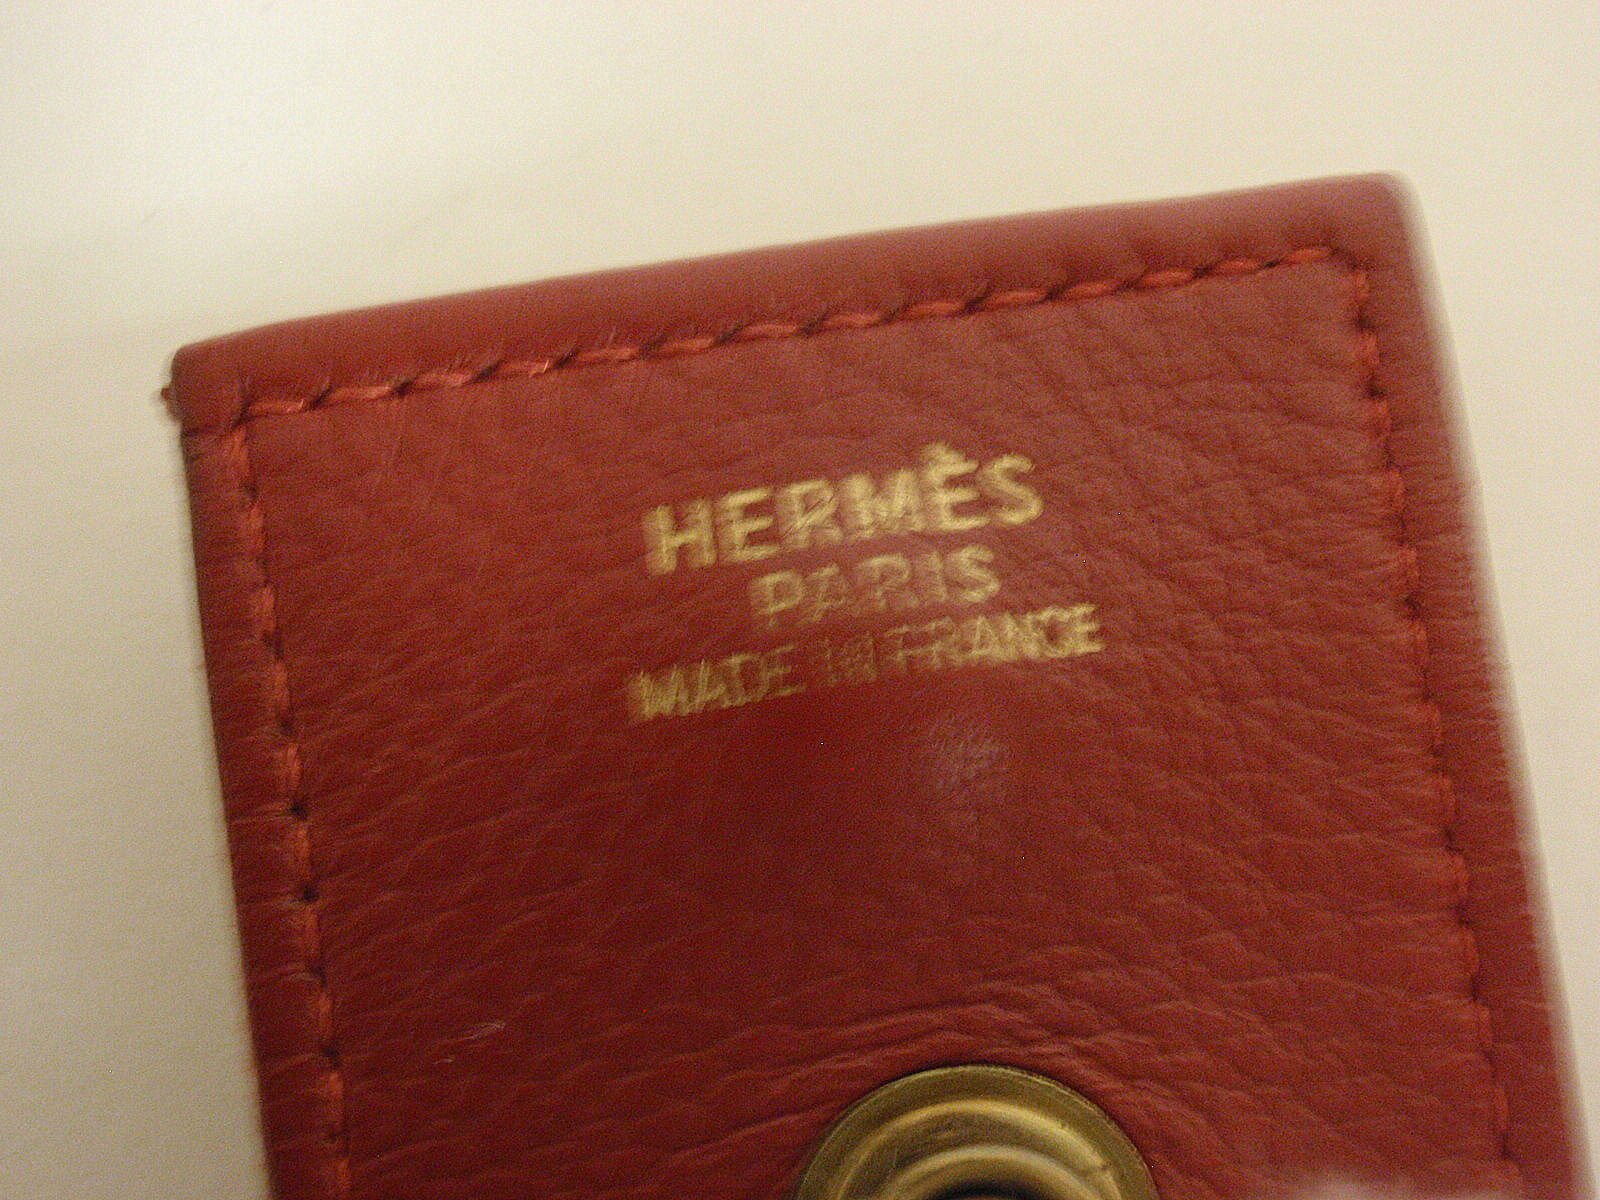 Shop HERMES Sac a Depeches Unisex Street Style Plain Leather Crossbody Bag  (H084109CK3Y) by yutamum